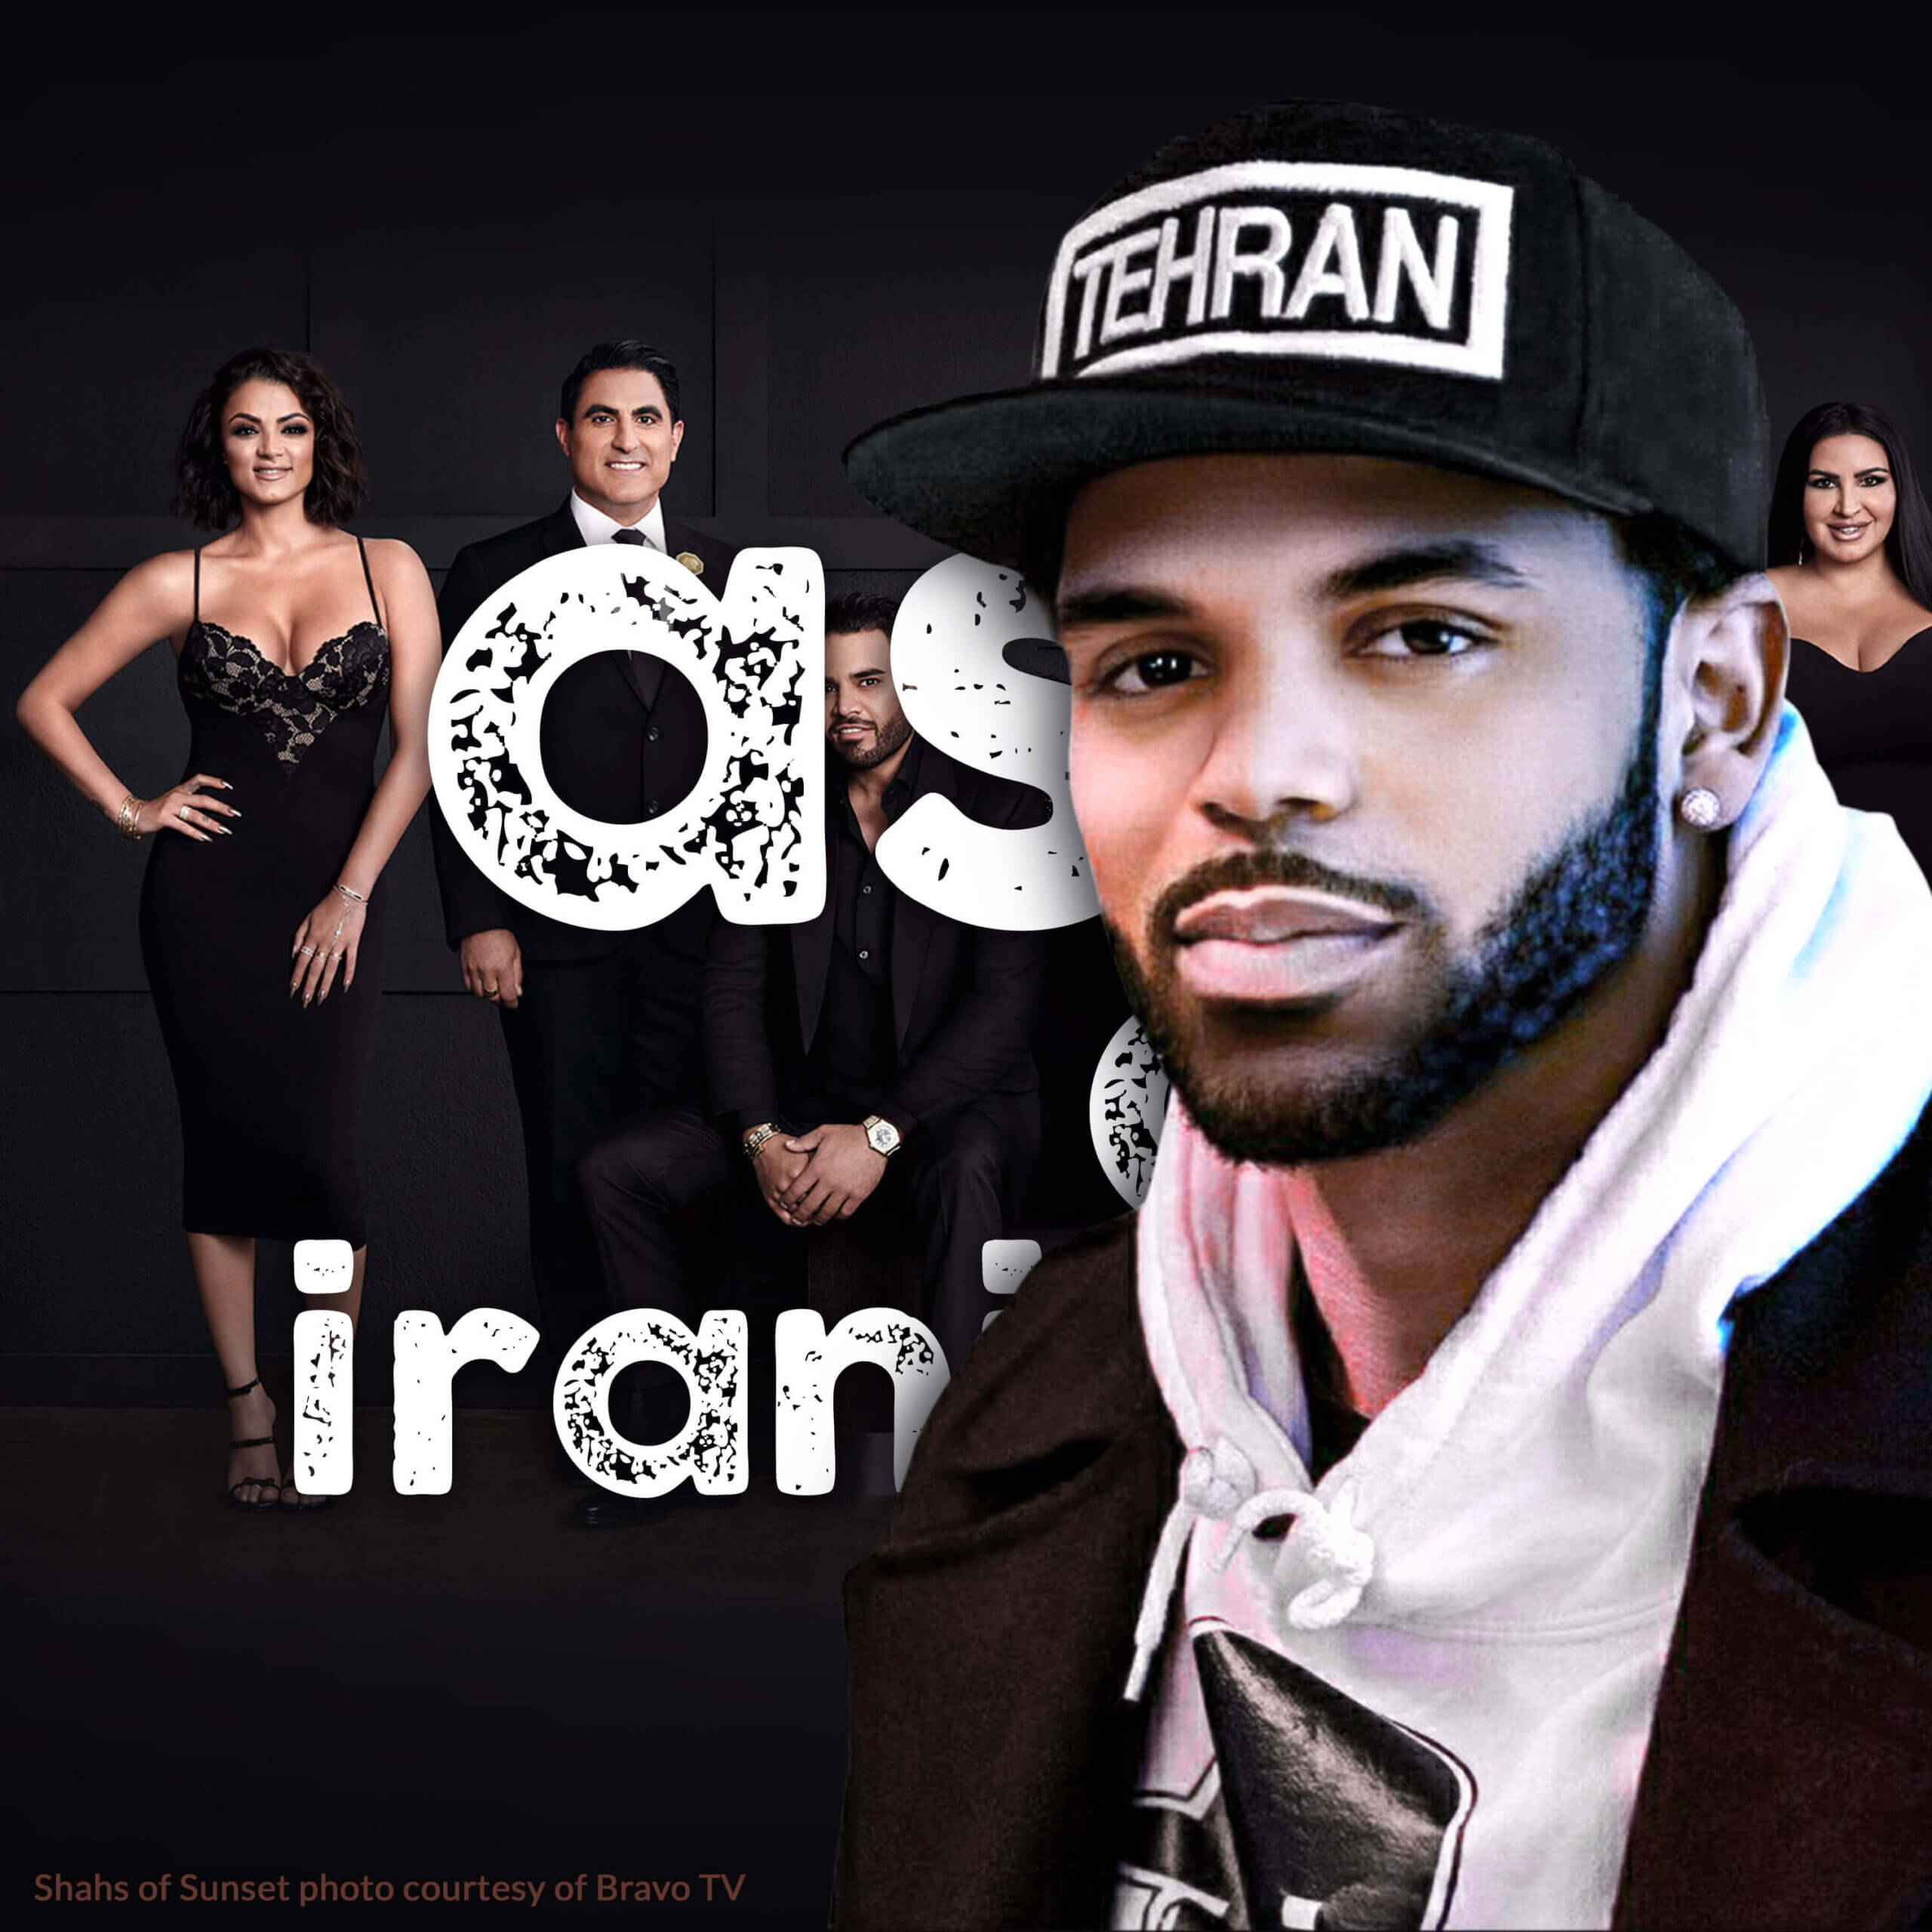 Why do Iranians blackface? (feat. Tehran Von Ghasri)